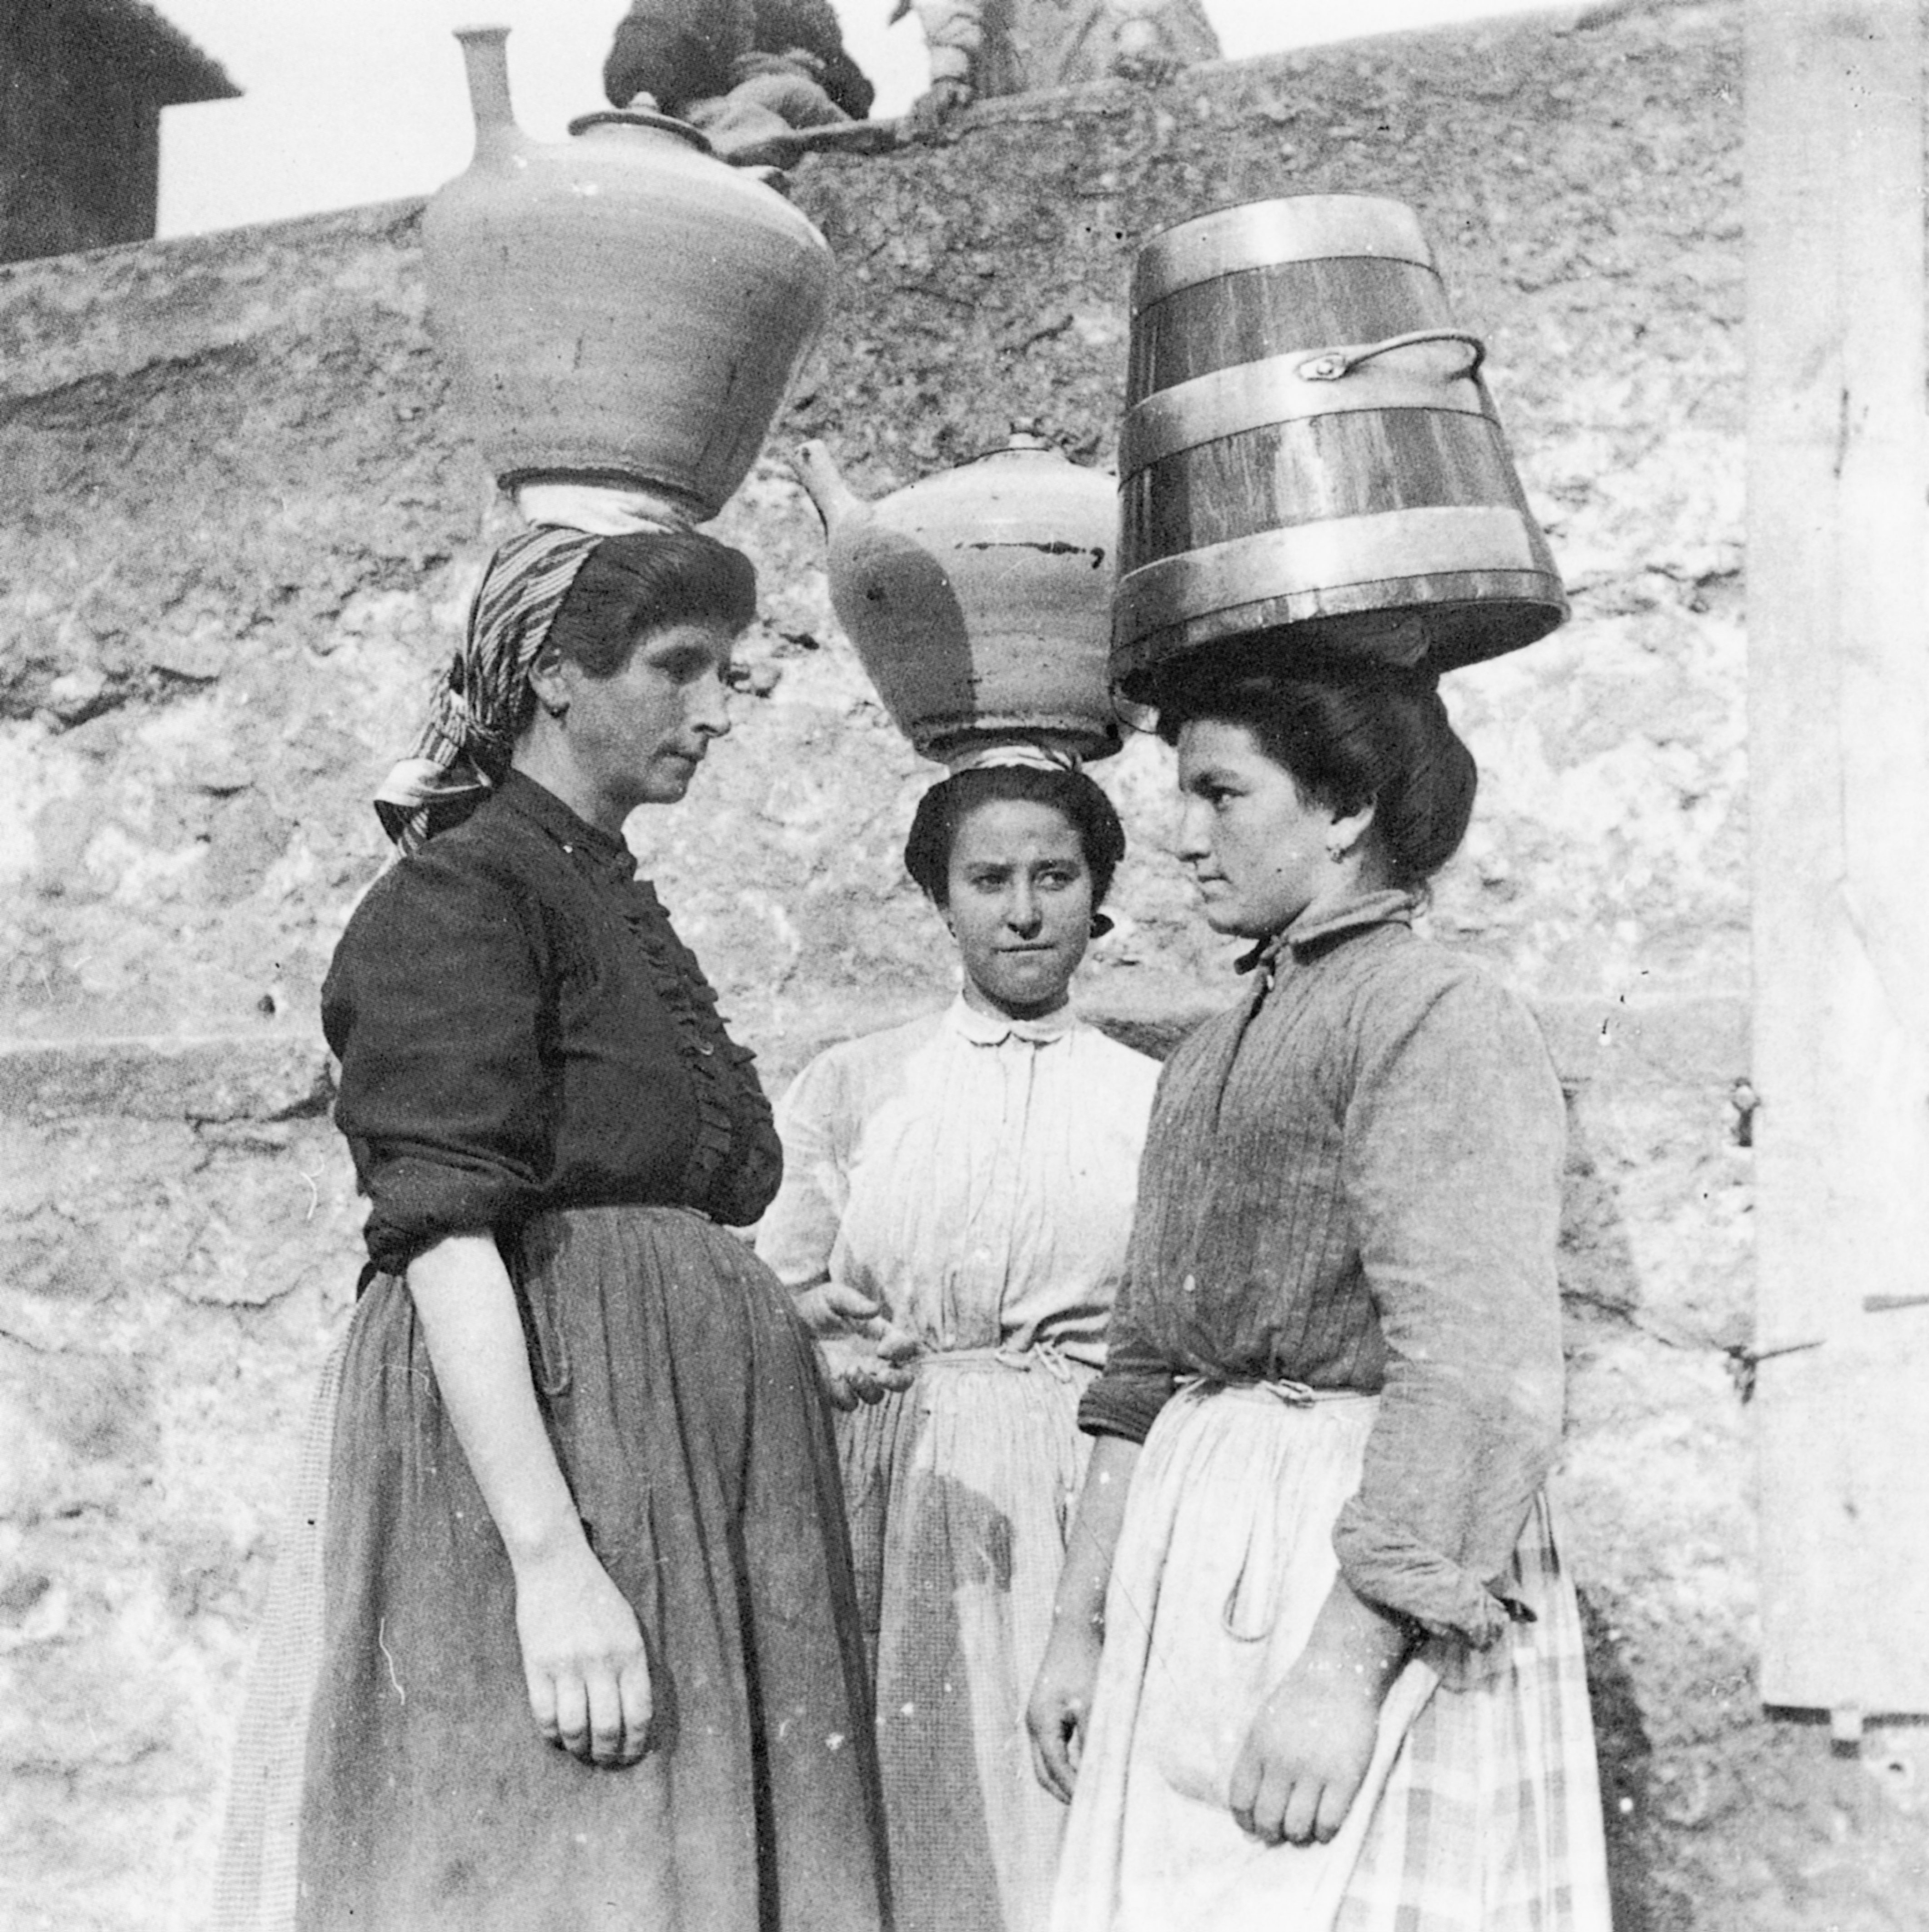 Jugs and bucket of water. Eulalia Abaitua. Mujeres vascas de ayer [Basque women of yesteryear]. Euskal Museoa Bilbao Basque Museum, 1990